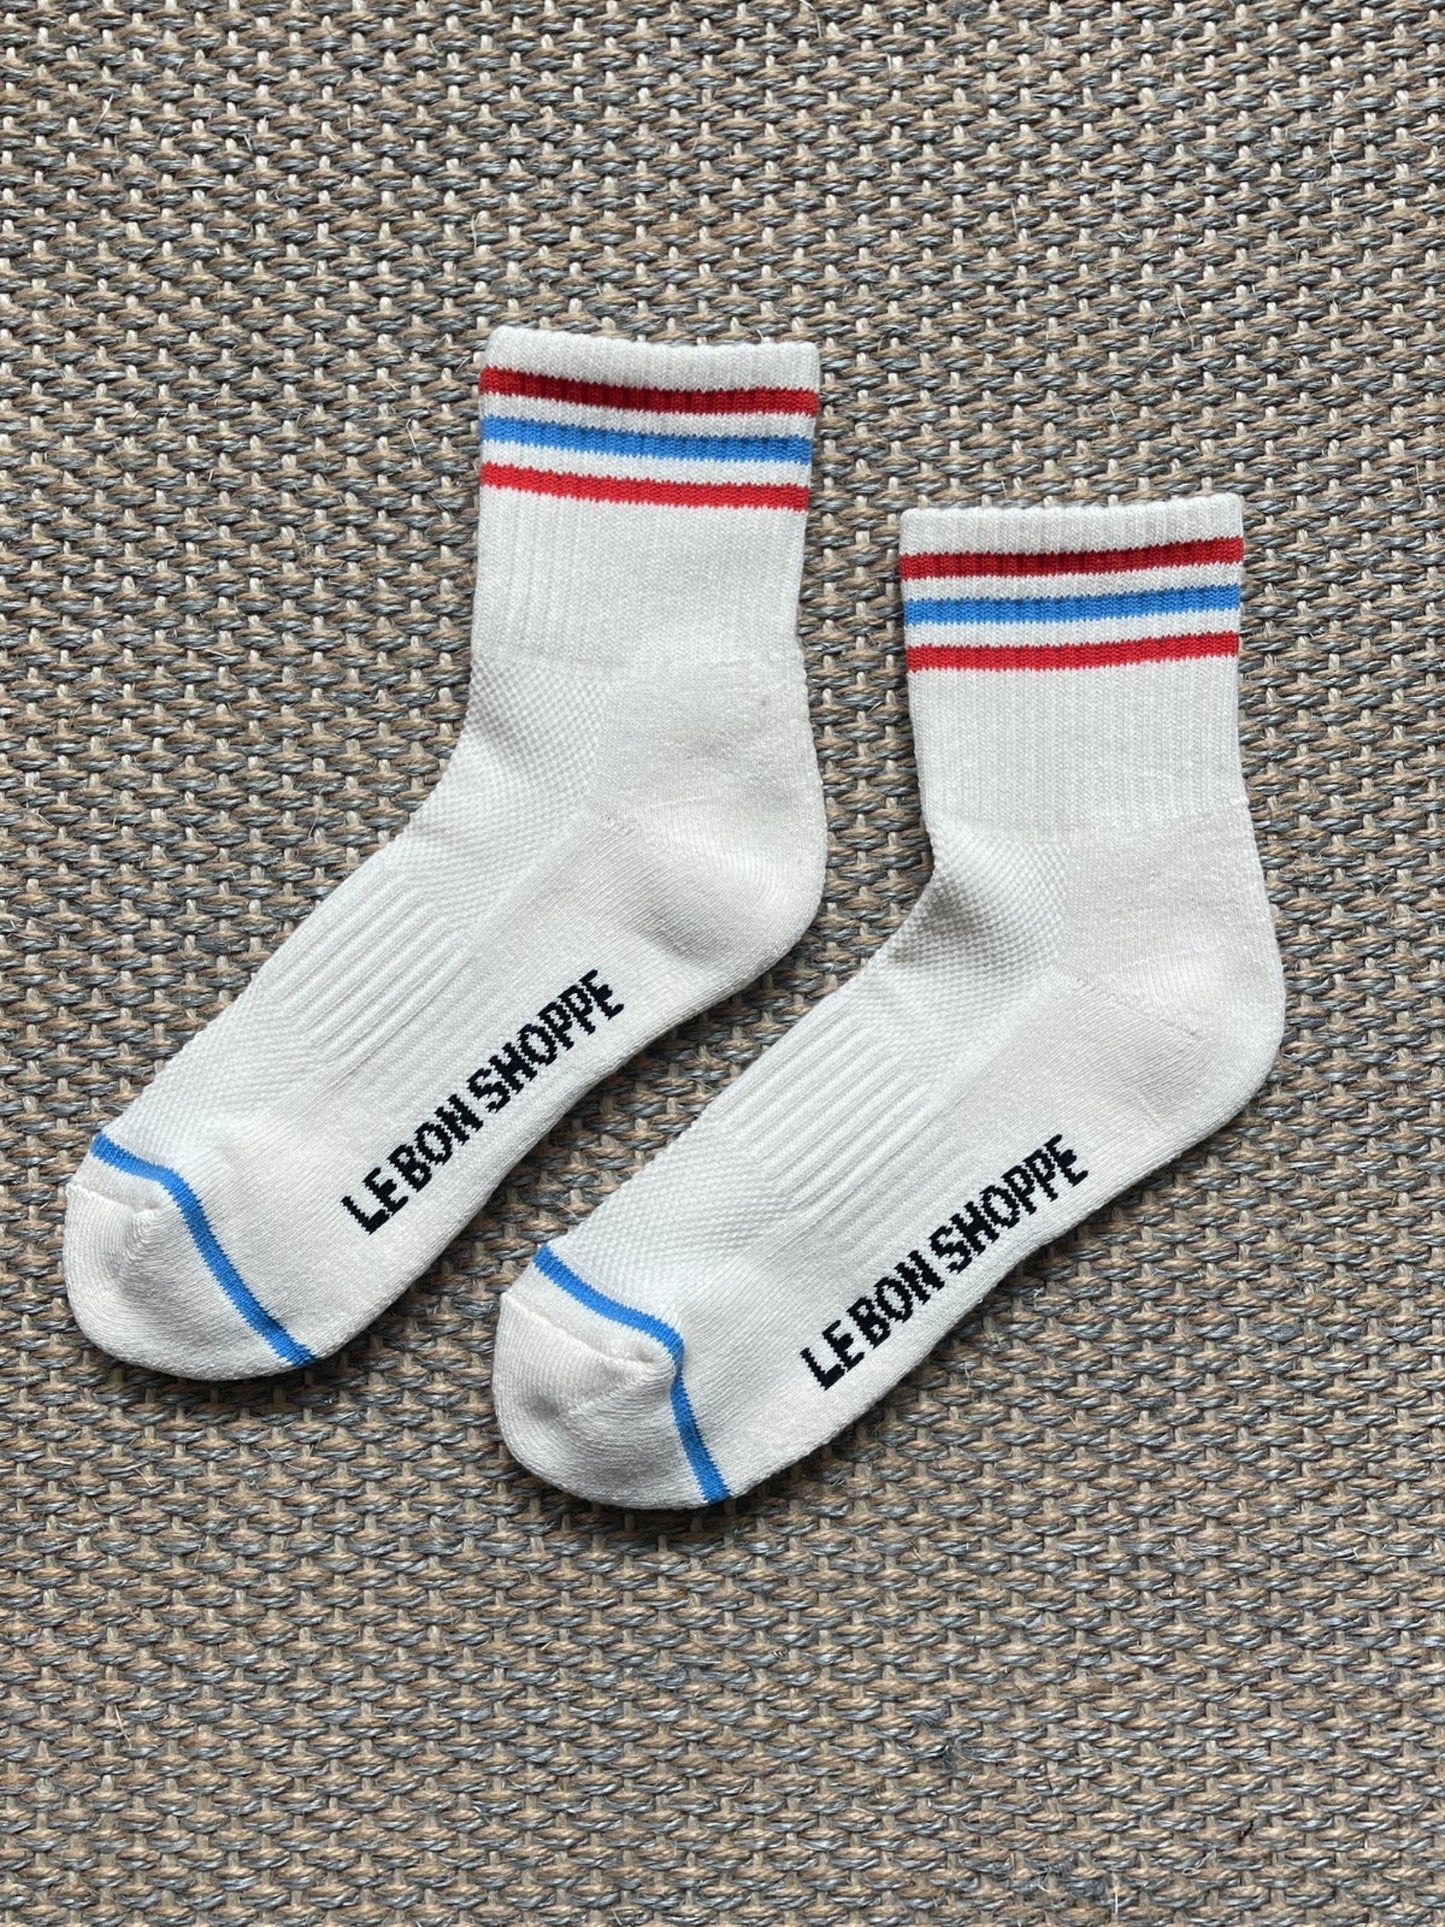 Le Bon Shoppe Girlfriend Socks / Leche